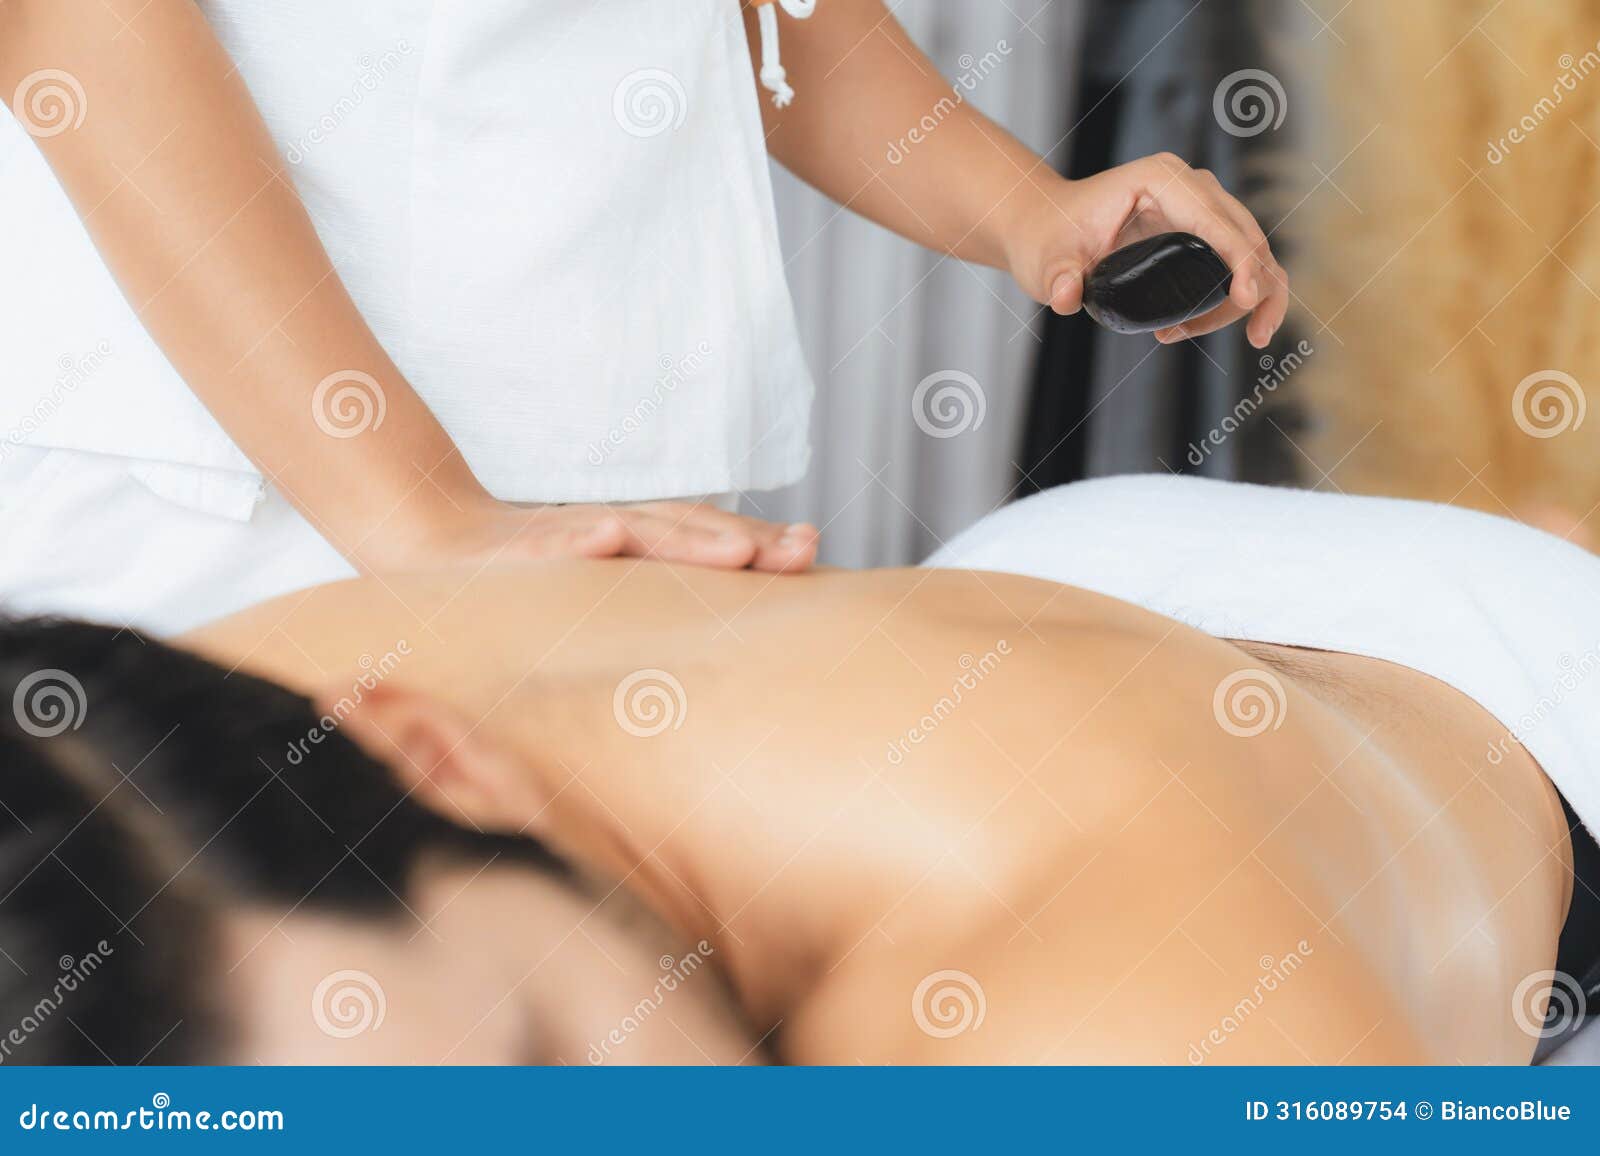 hot stone massage at spa salon in luxury resort. quiescent